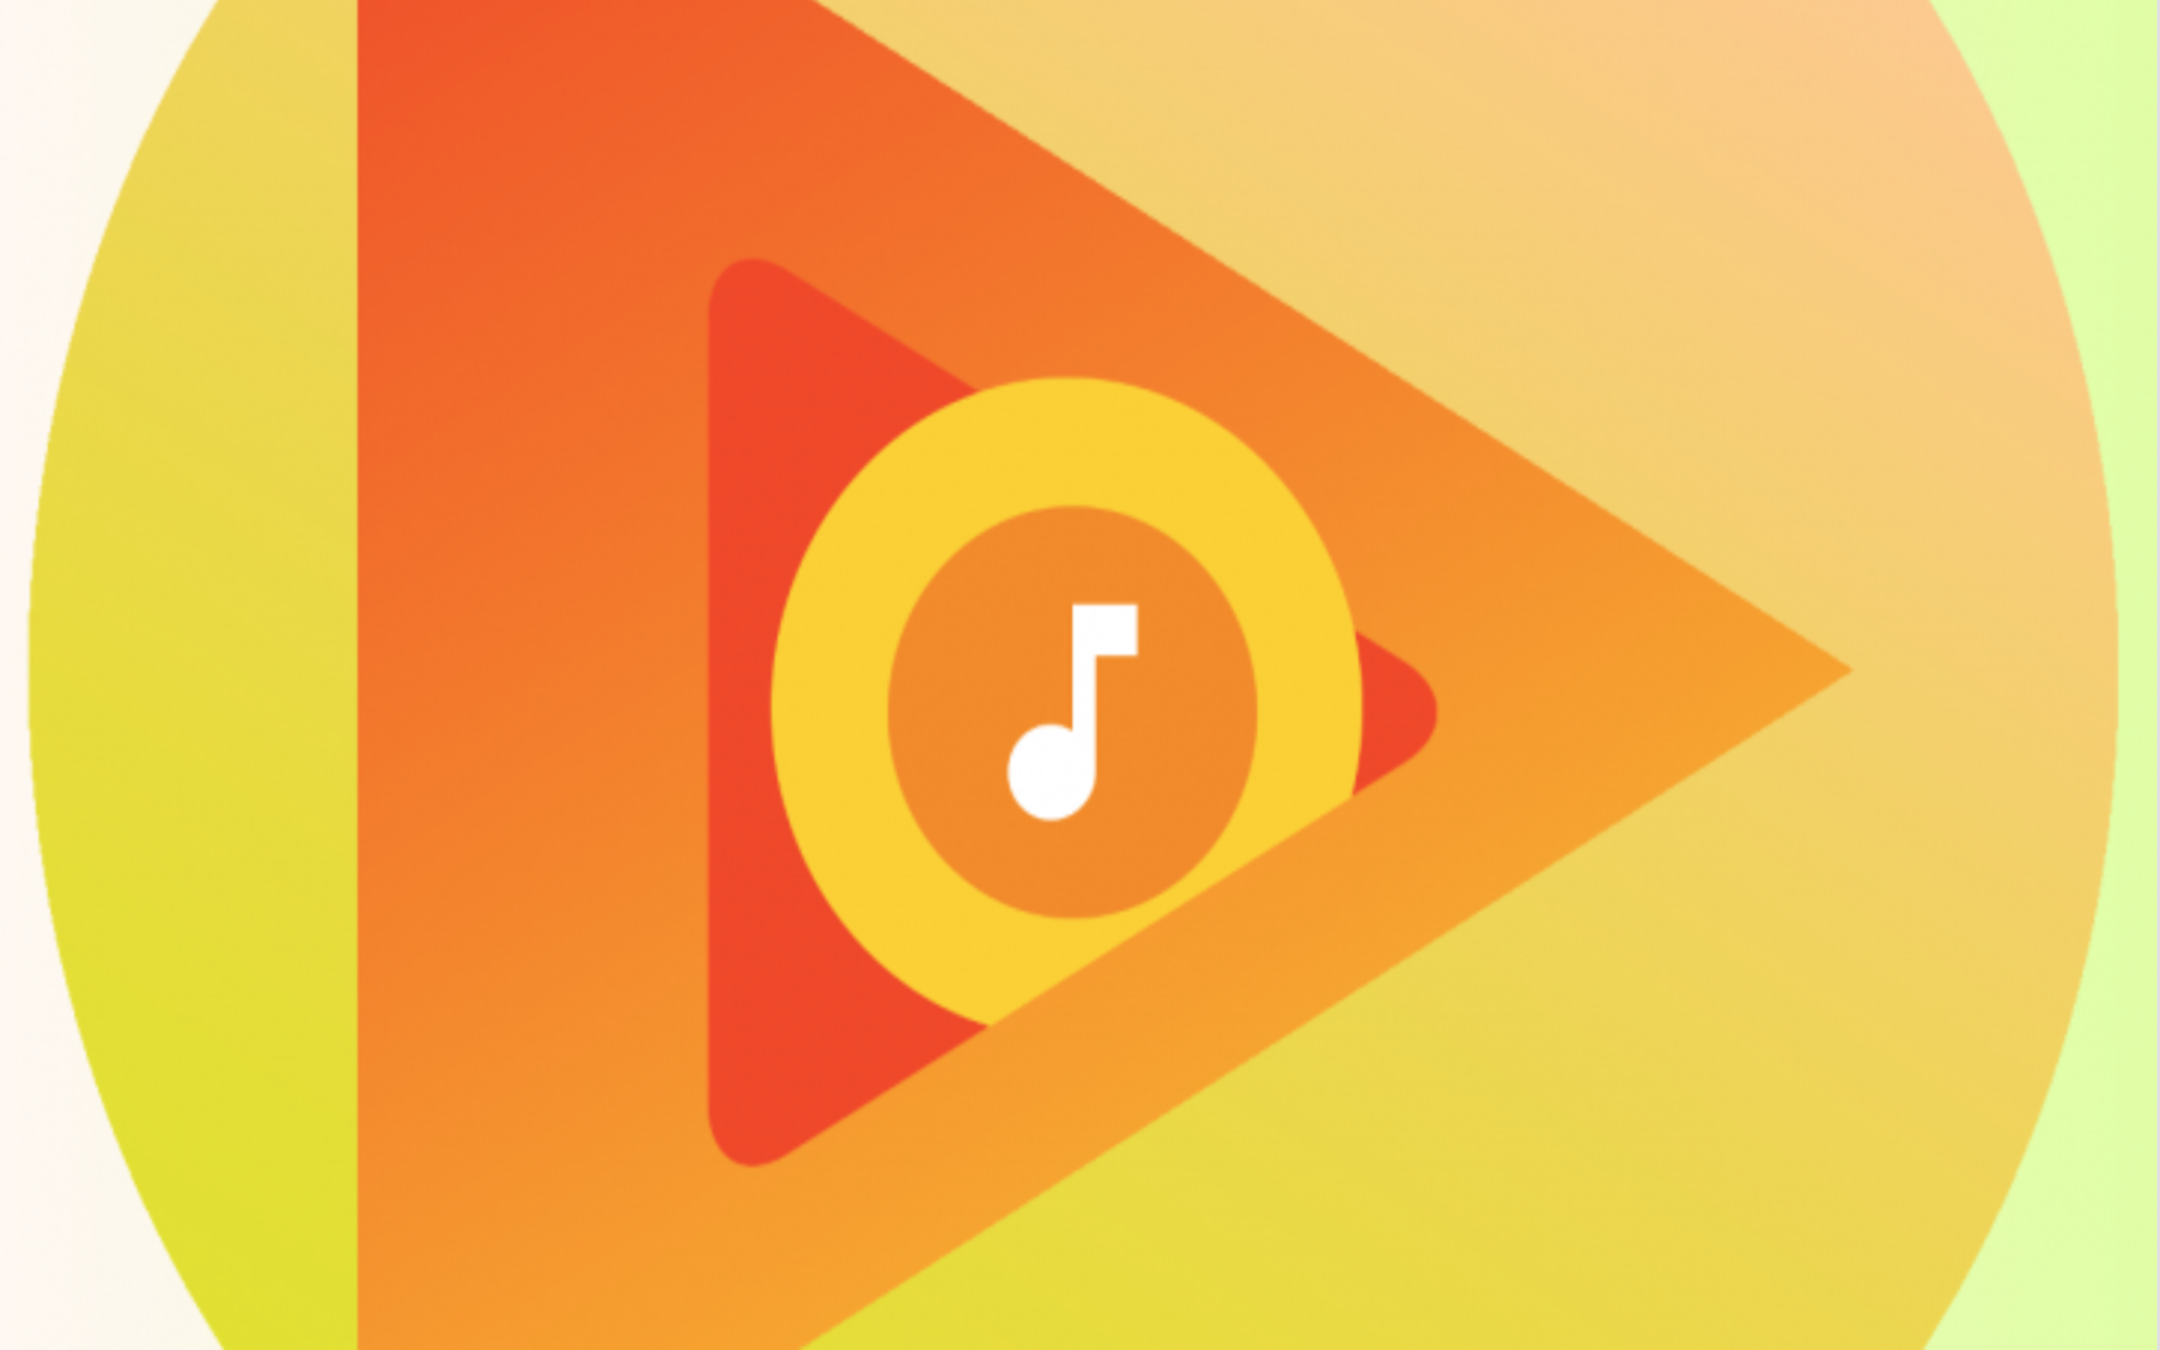 Well play music. Гугл Мьюзик. Google Play Music. Google Play Music logo. Google Play Music Google Play.